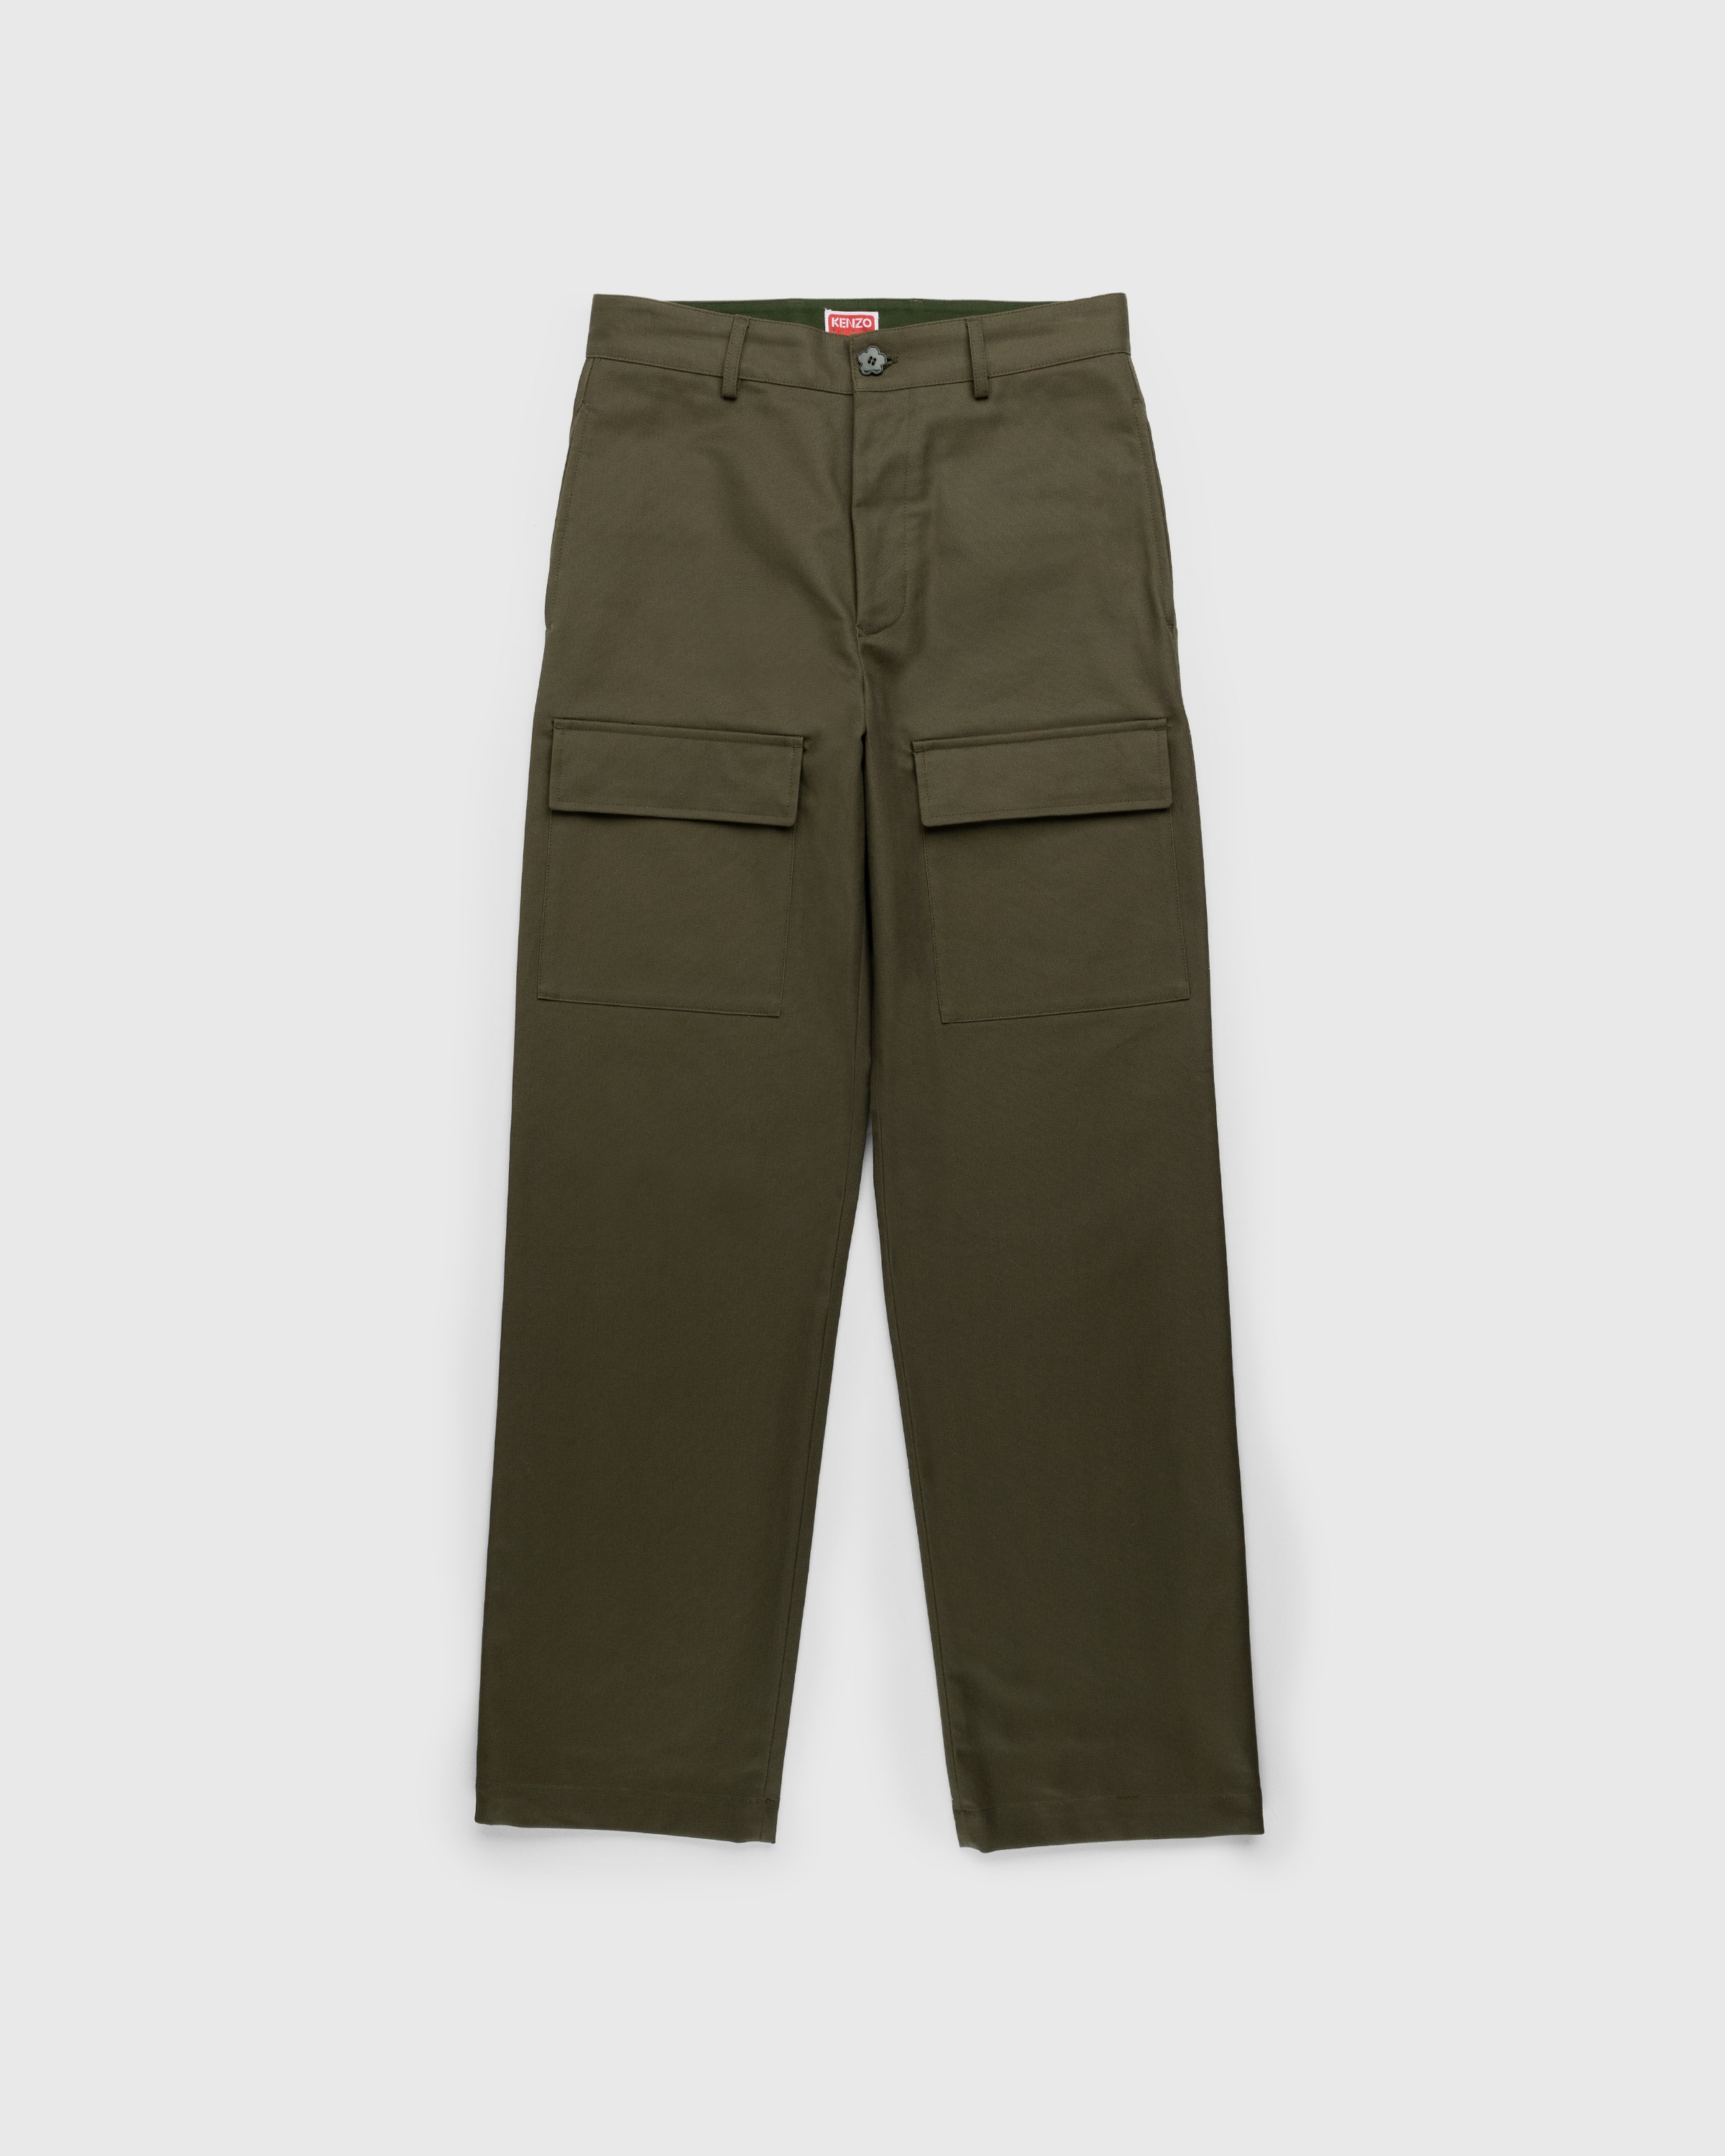 Kenzo - Tailored Pants Dark Khaki - Clothing - Green - Image 1